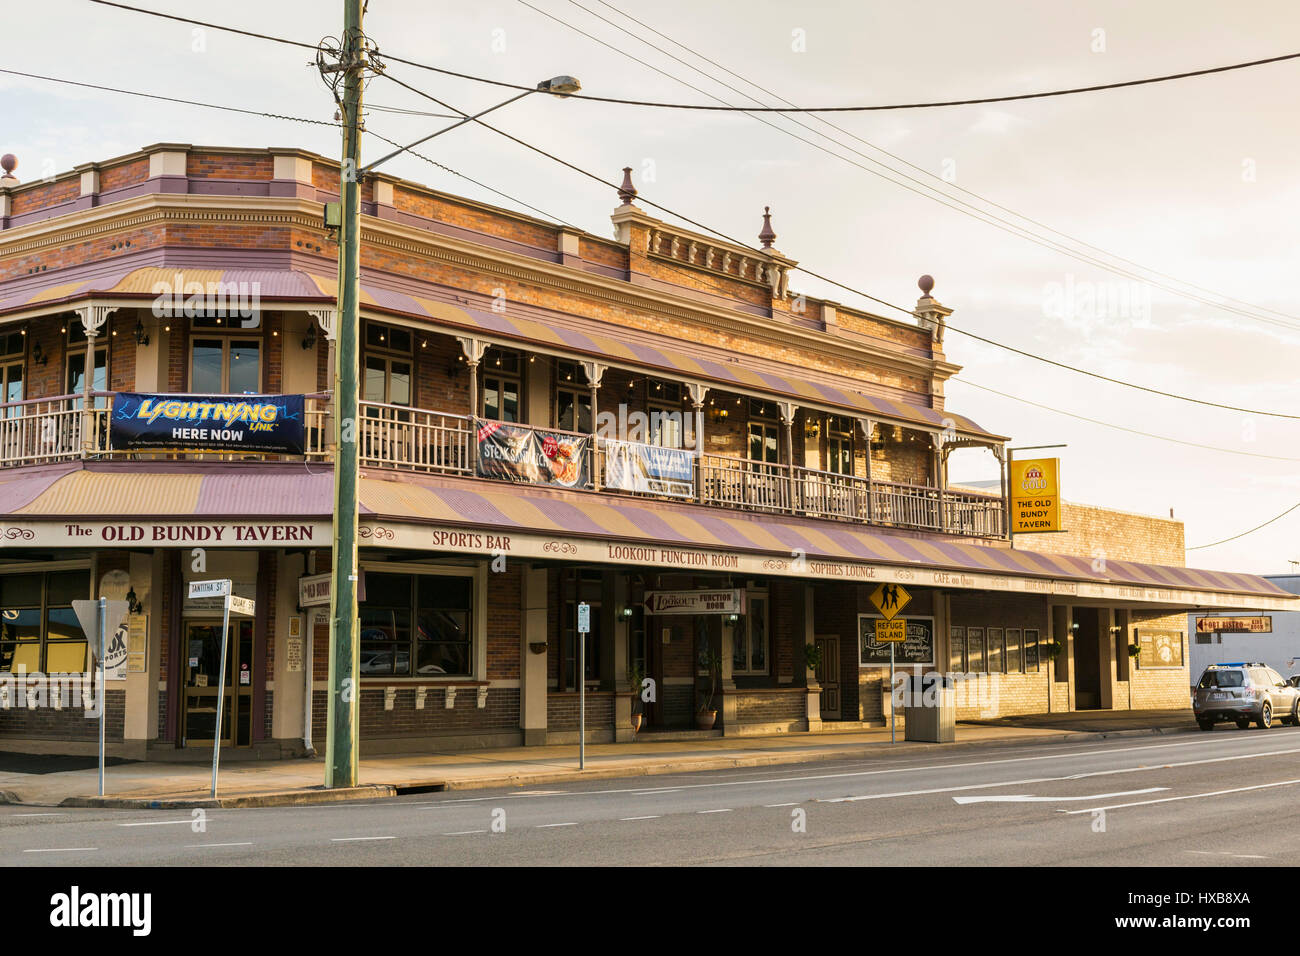 The Old Bundy Tavern - one of Bundaberg's most historic hotels, built in 1917.  Bundaberg, Queensland, Australia Stock Photo